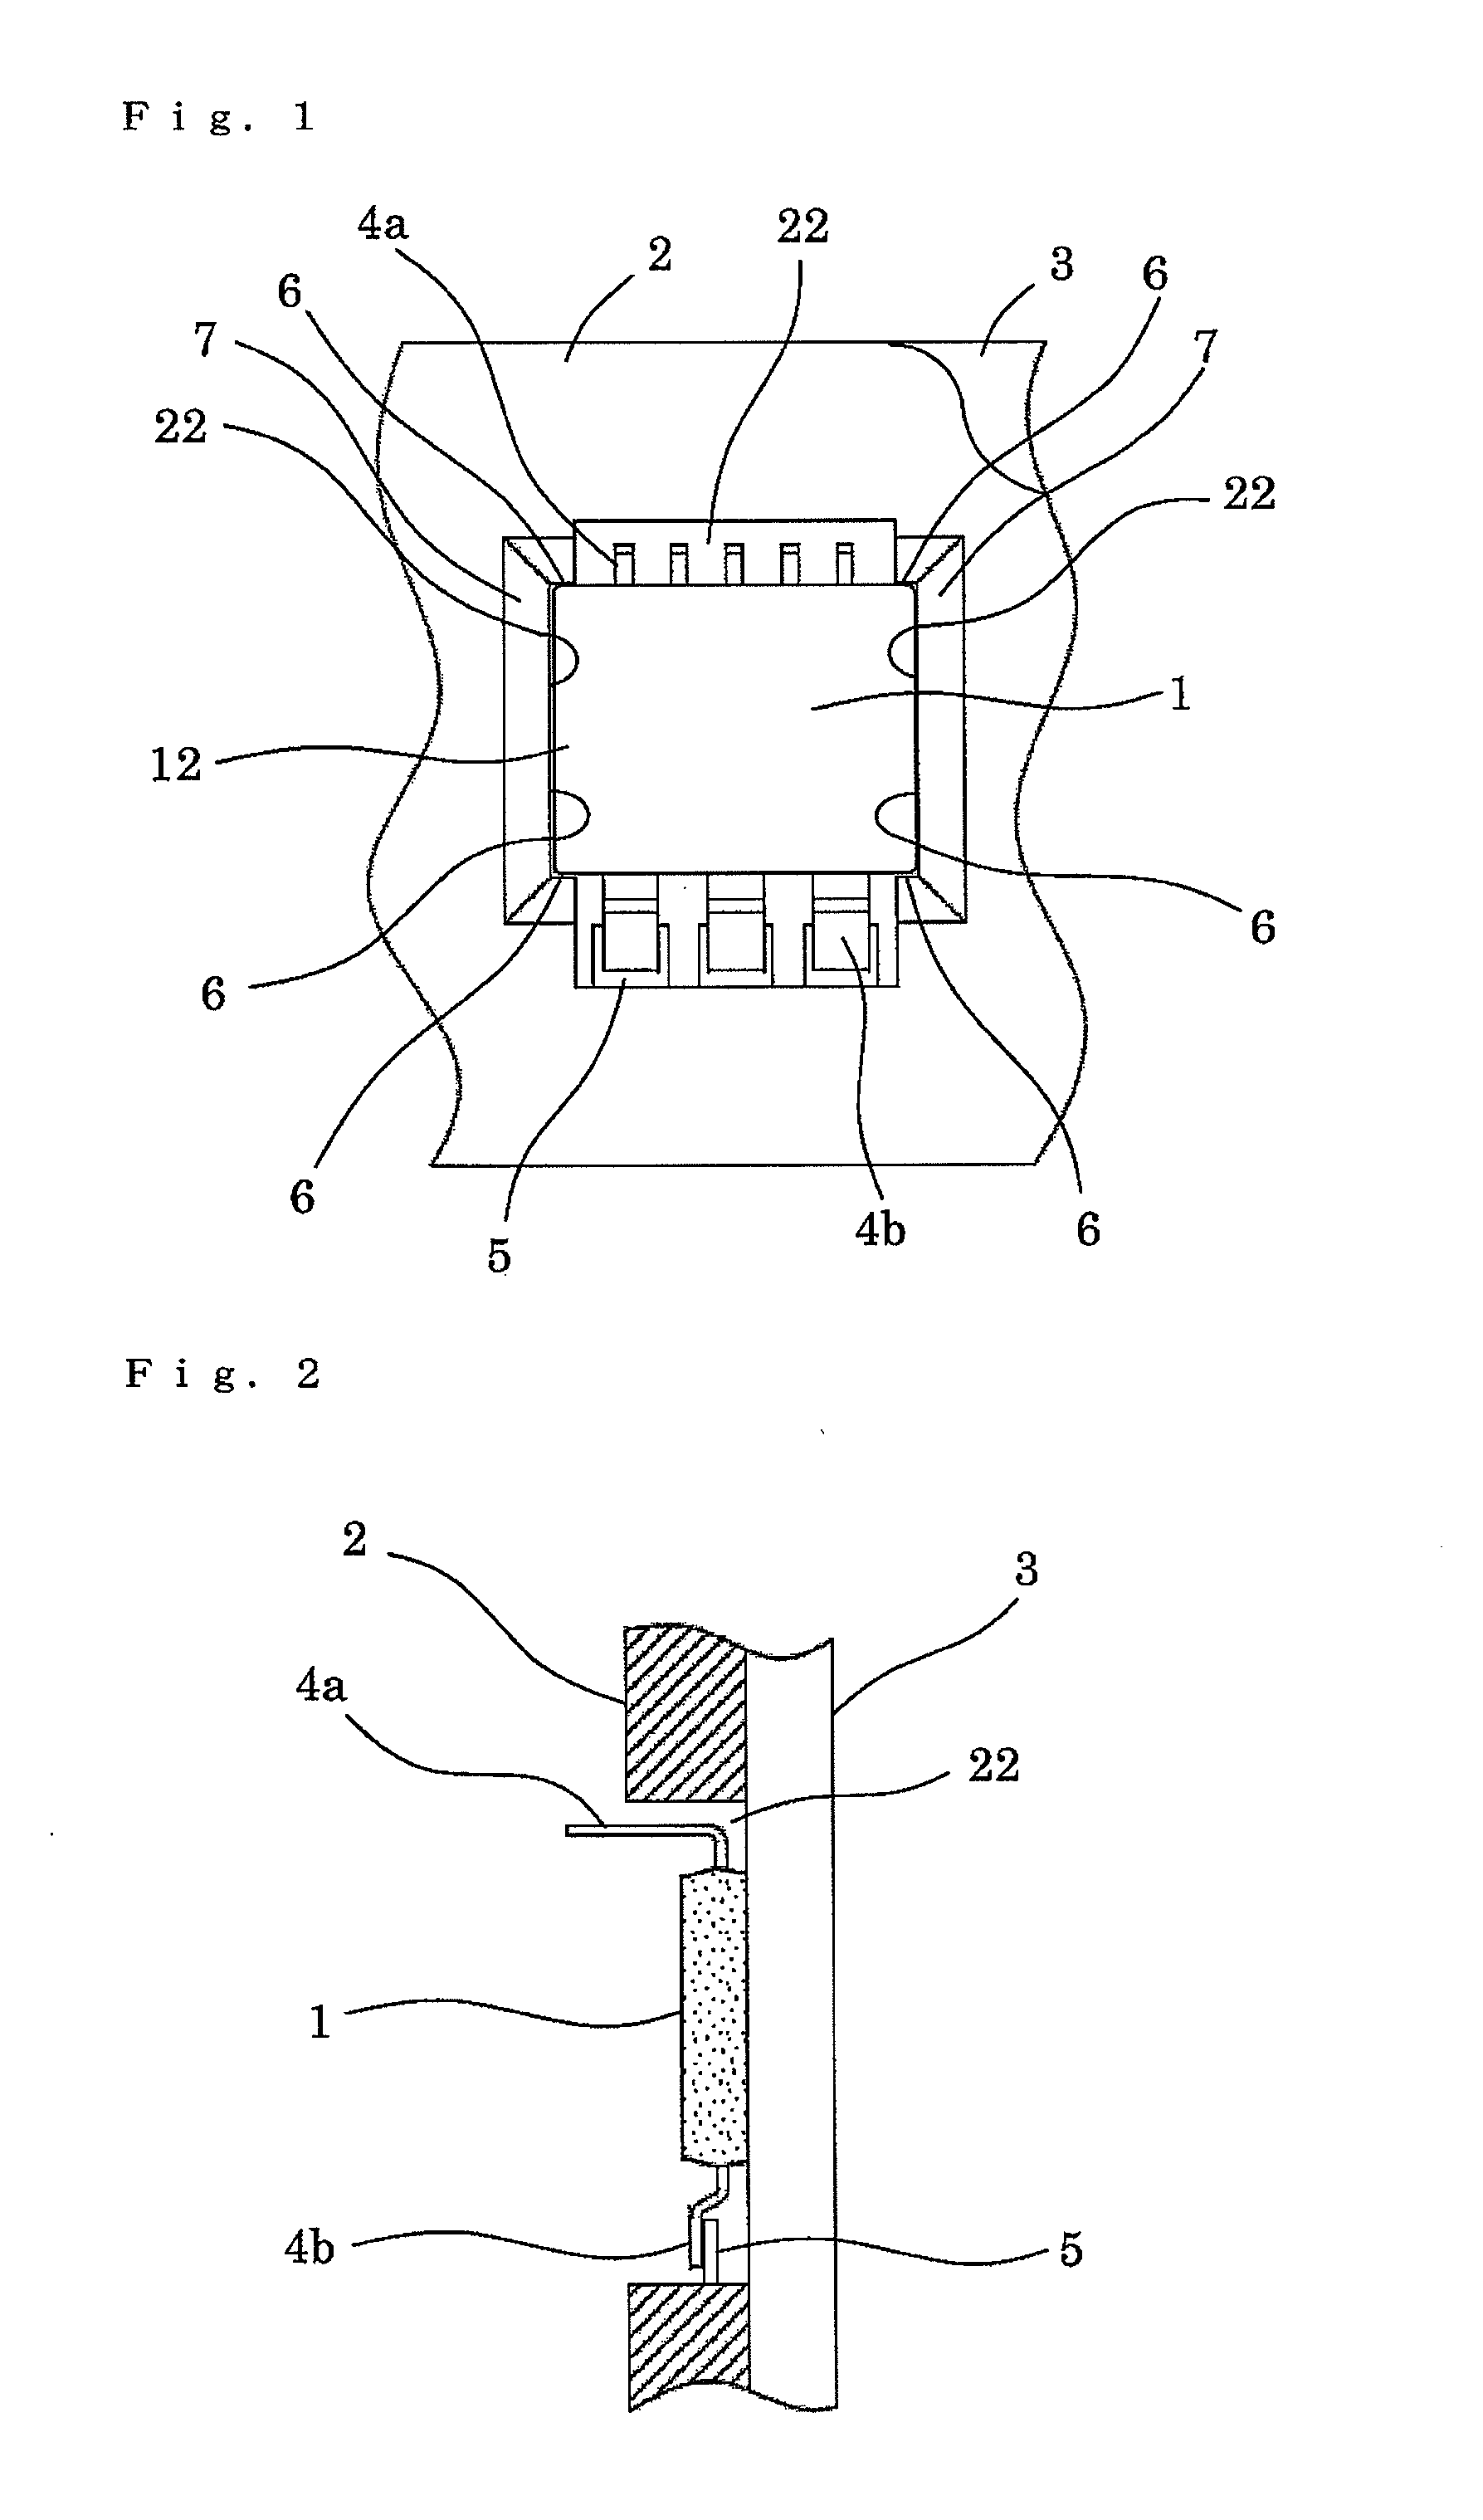 Semiconductor apparatus